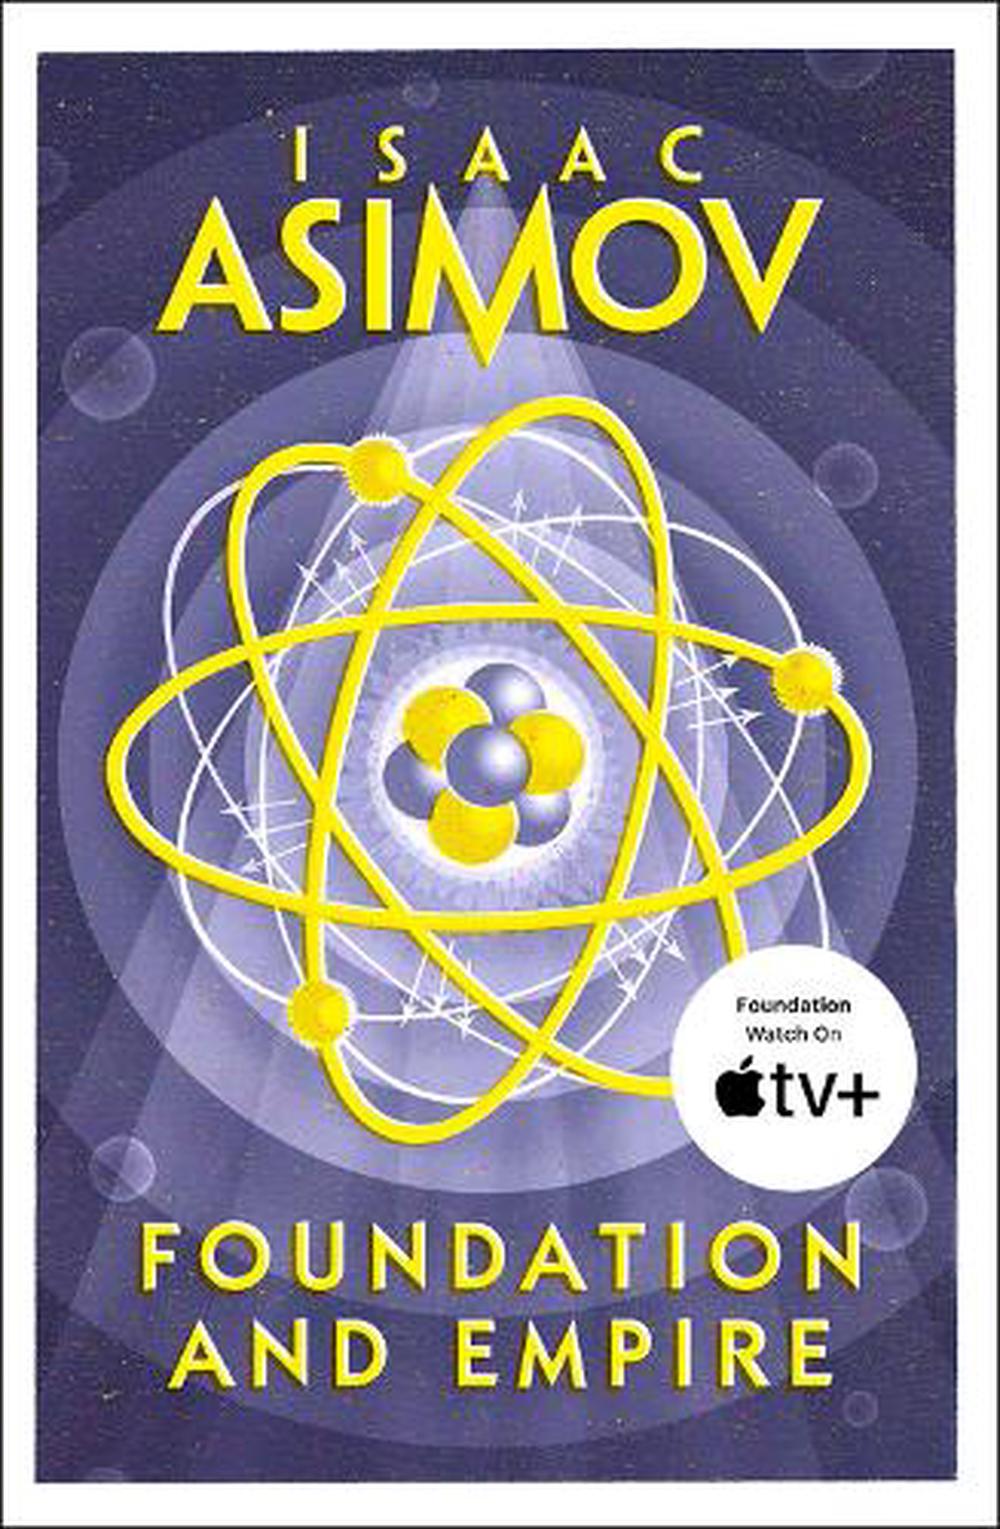 books by asimov